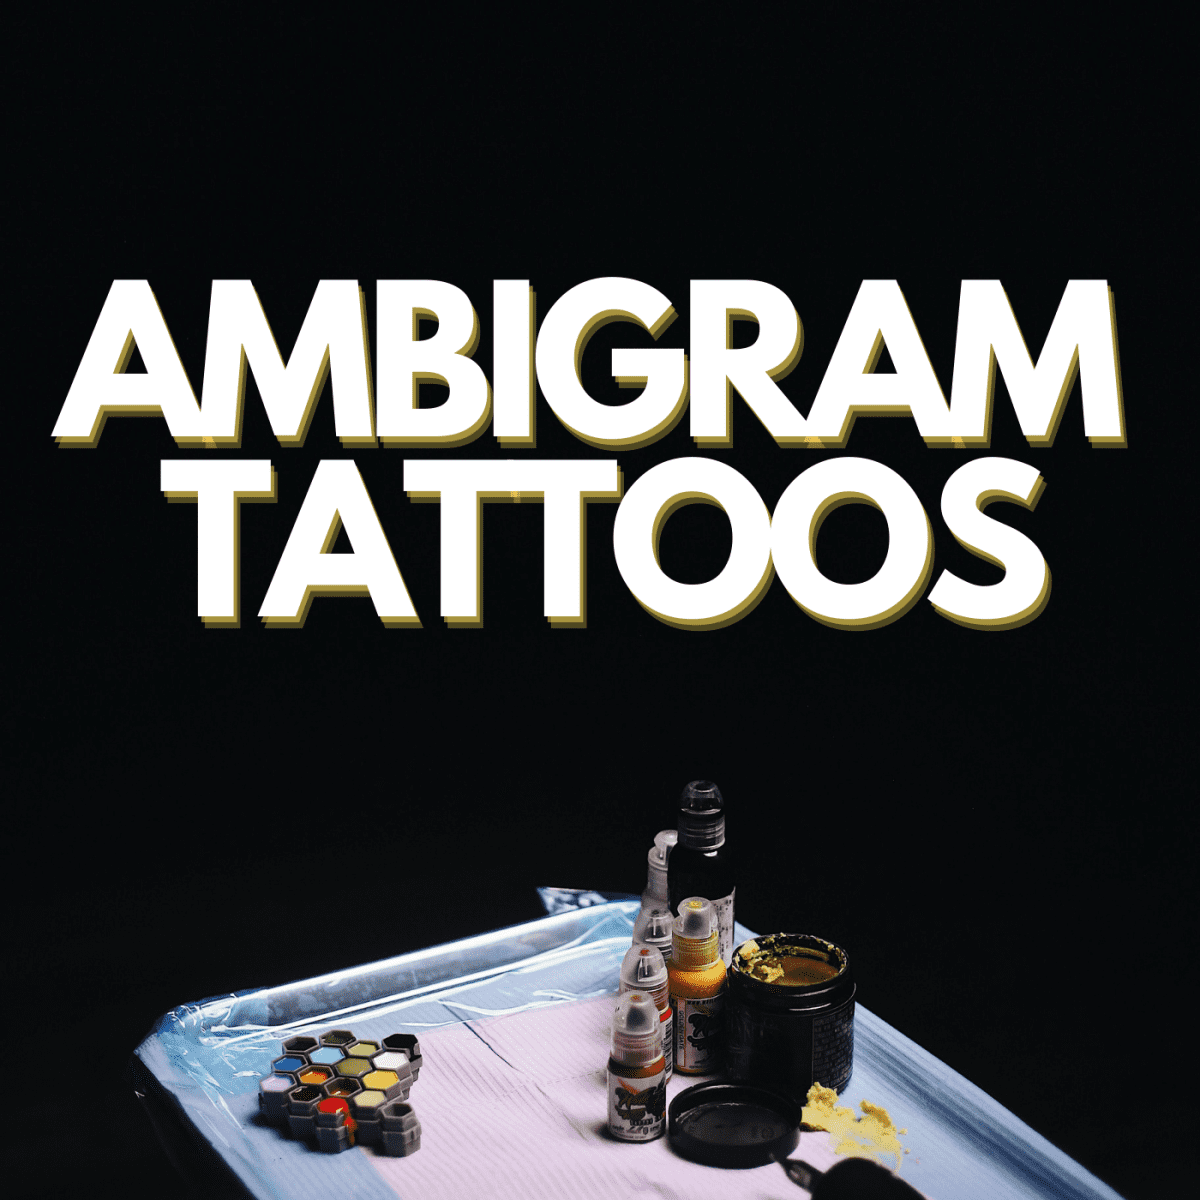 cool Top 100 ambigram tattoos - http://4develop.com.ua/top-100-ambigram- tattoos/ Check more at http://4develop.com.ua/top-100-ambigram-tattoos/